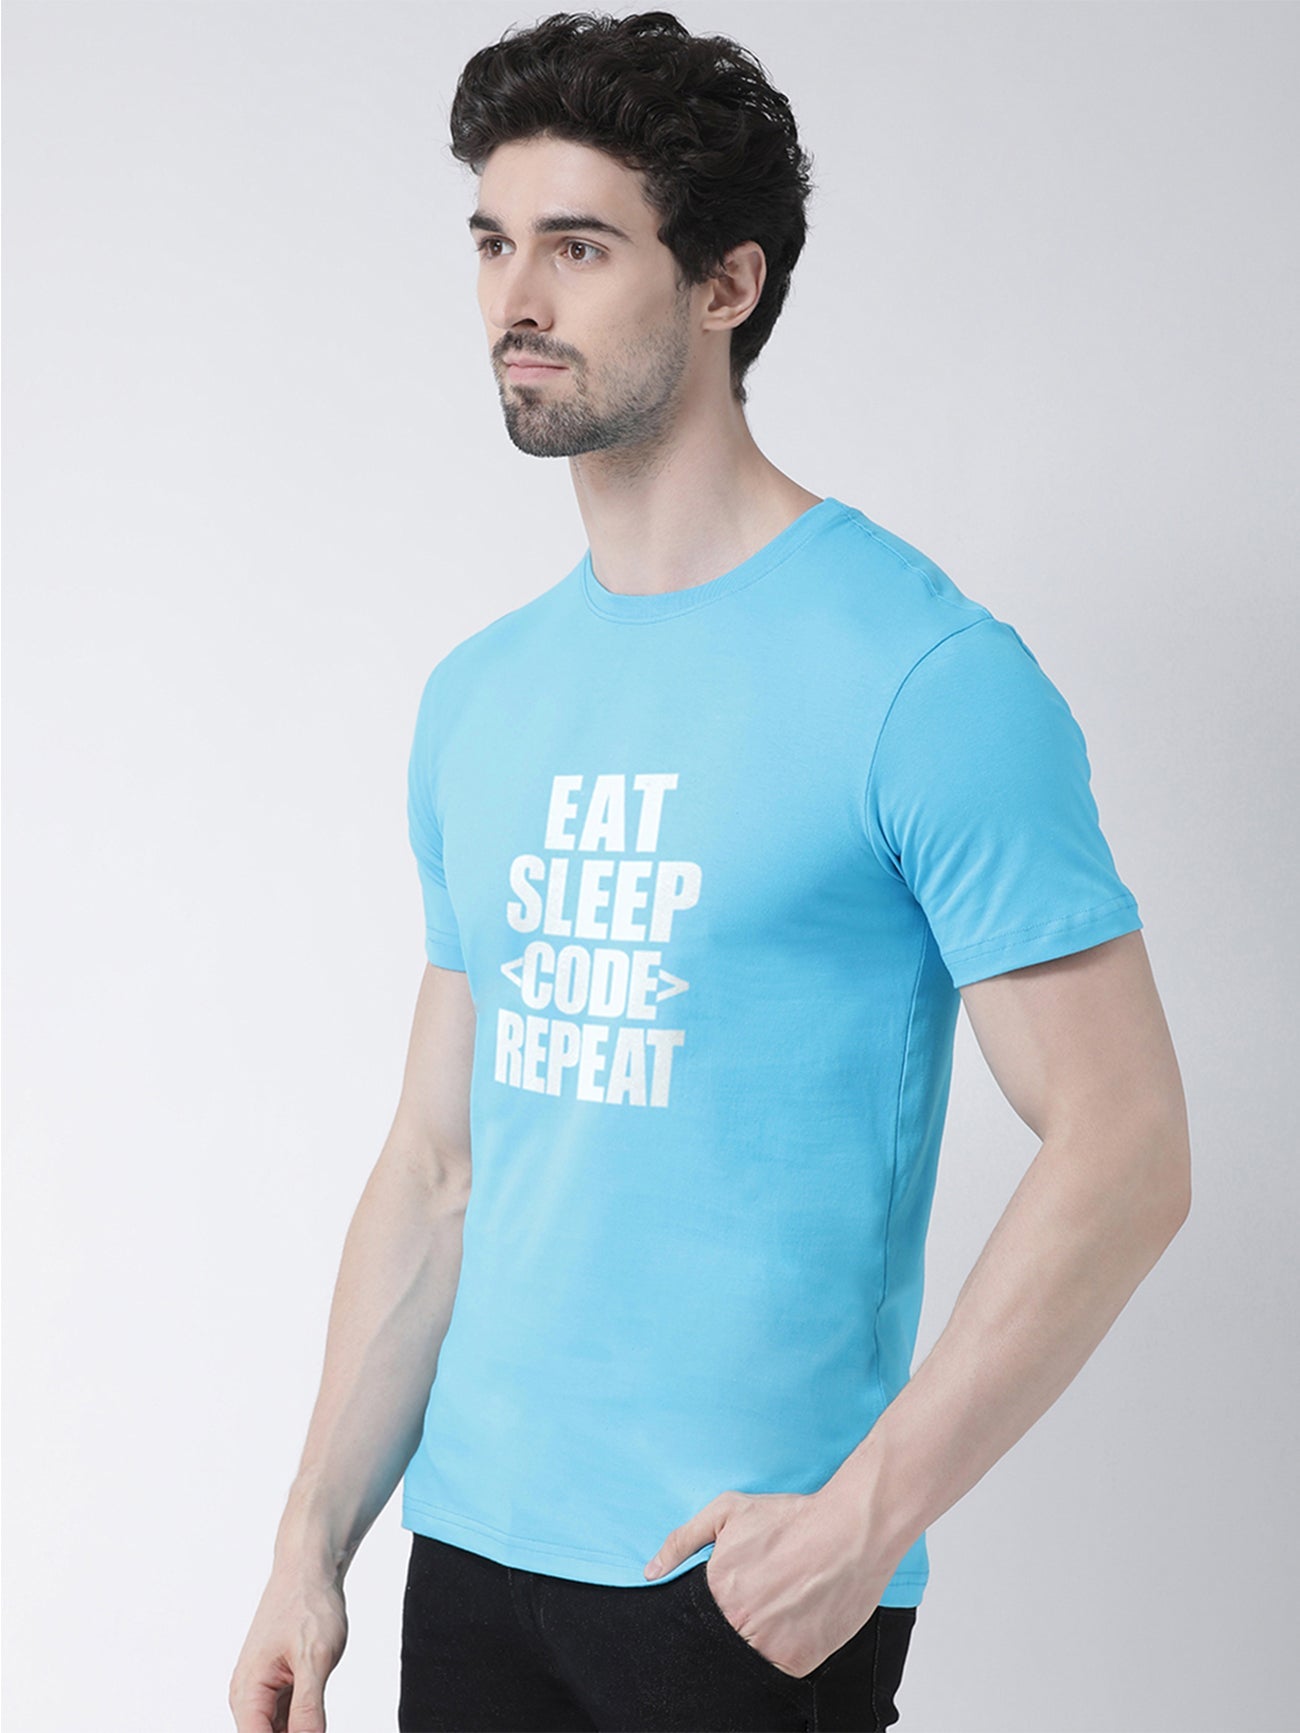 Eat Sleep Printed Round neck T-shirt - Friskers